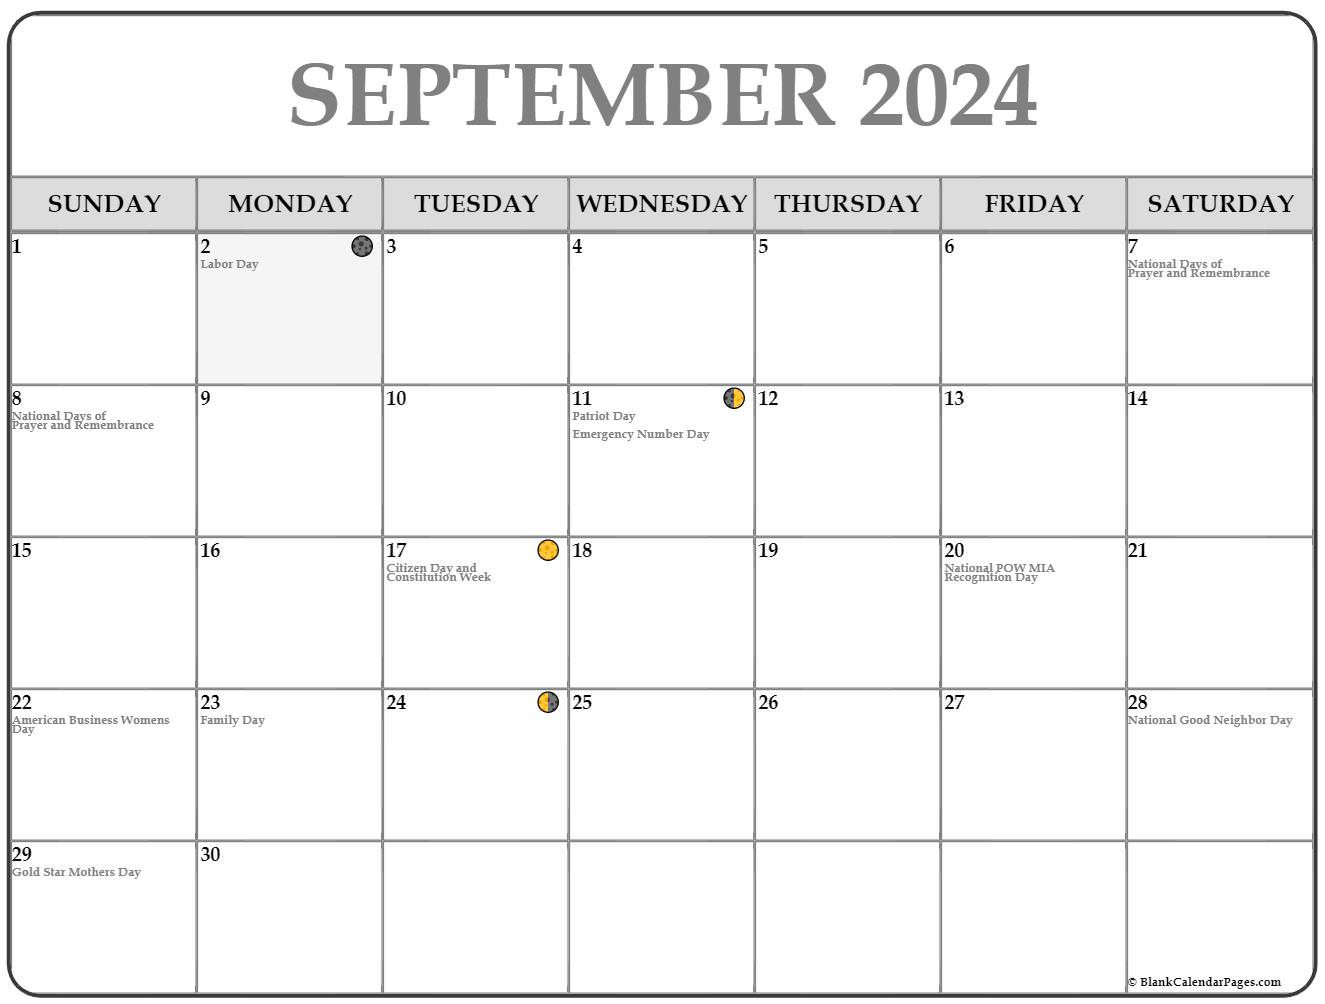 September 2021 Lunar Calendar Moon Phase Calendar